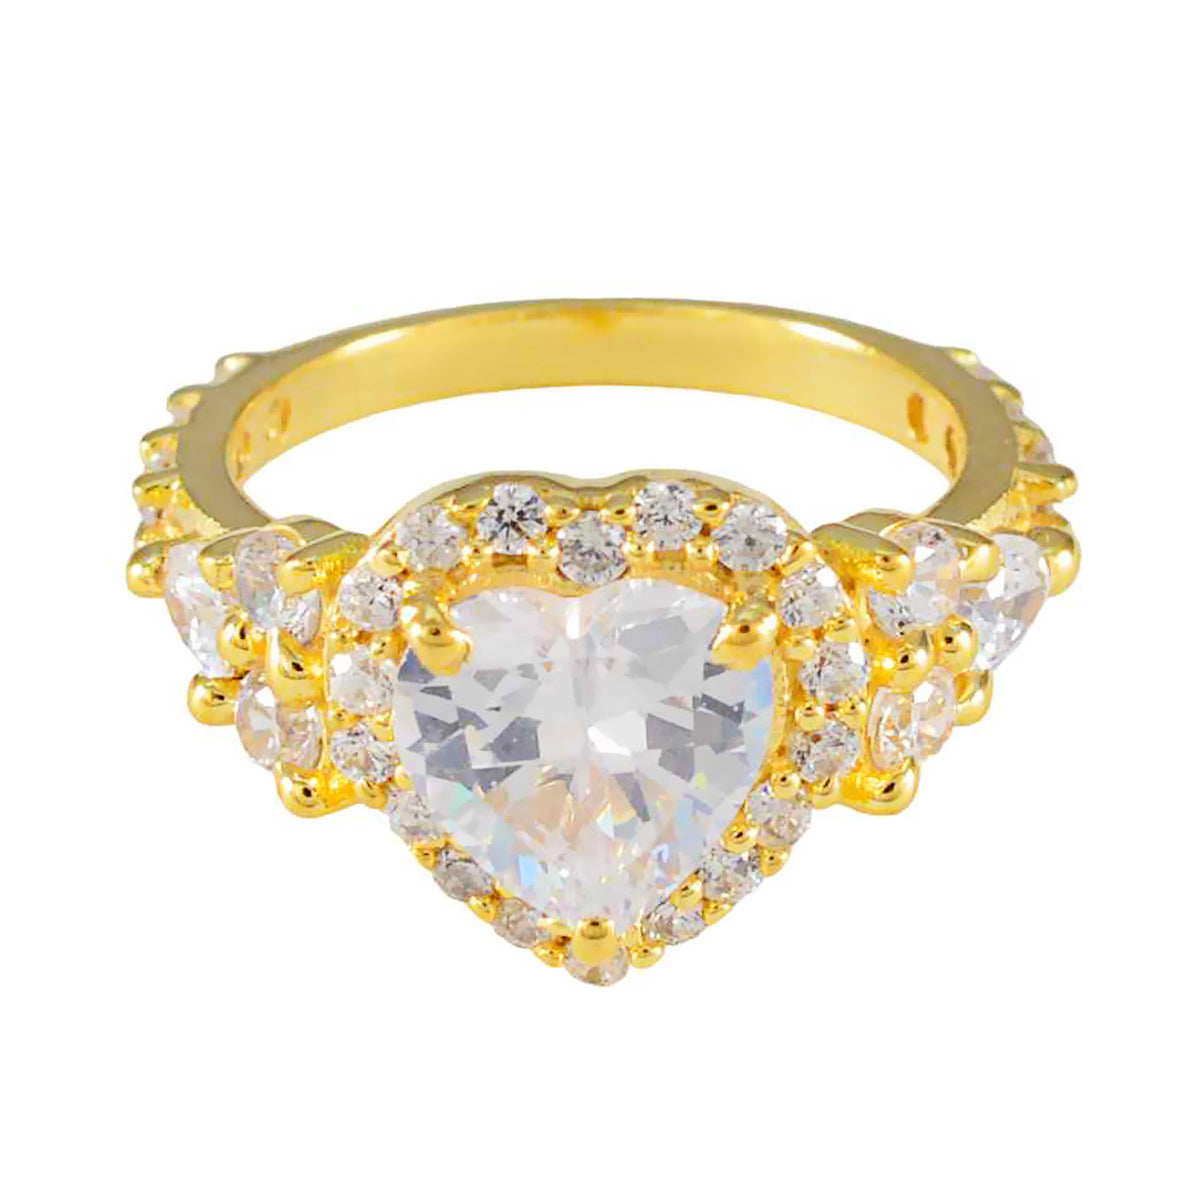 Anillo de plata clásico riyo con chapado en oro amarillo, anillo de compromiso de joyería con forma de corazón de piedra cz blanca